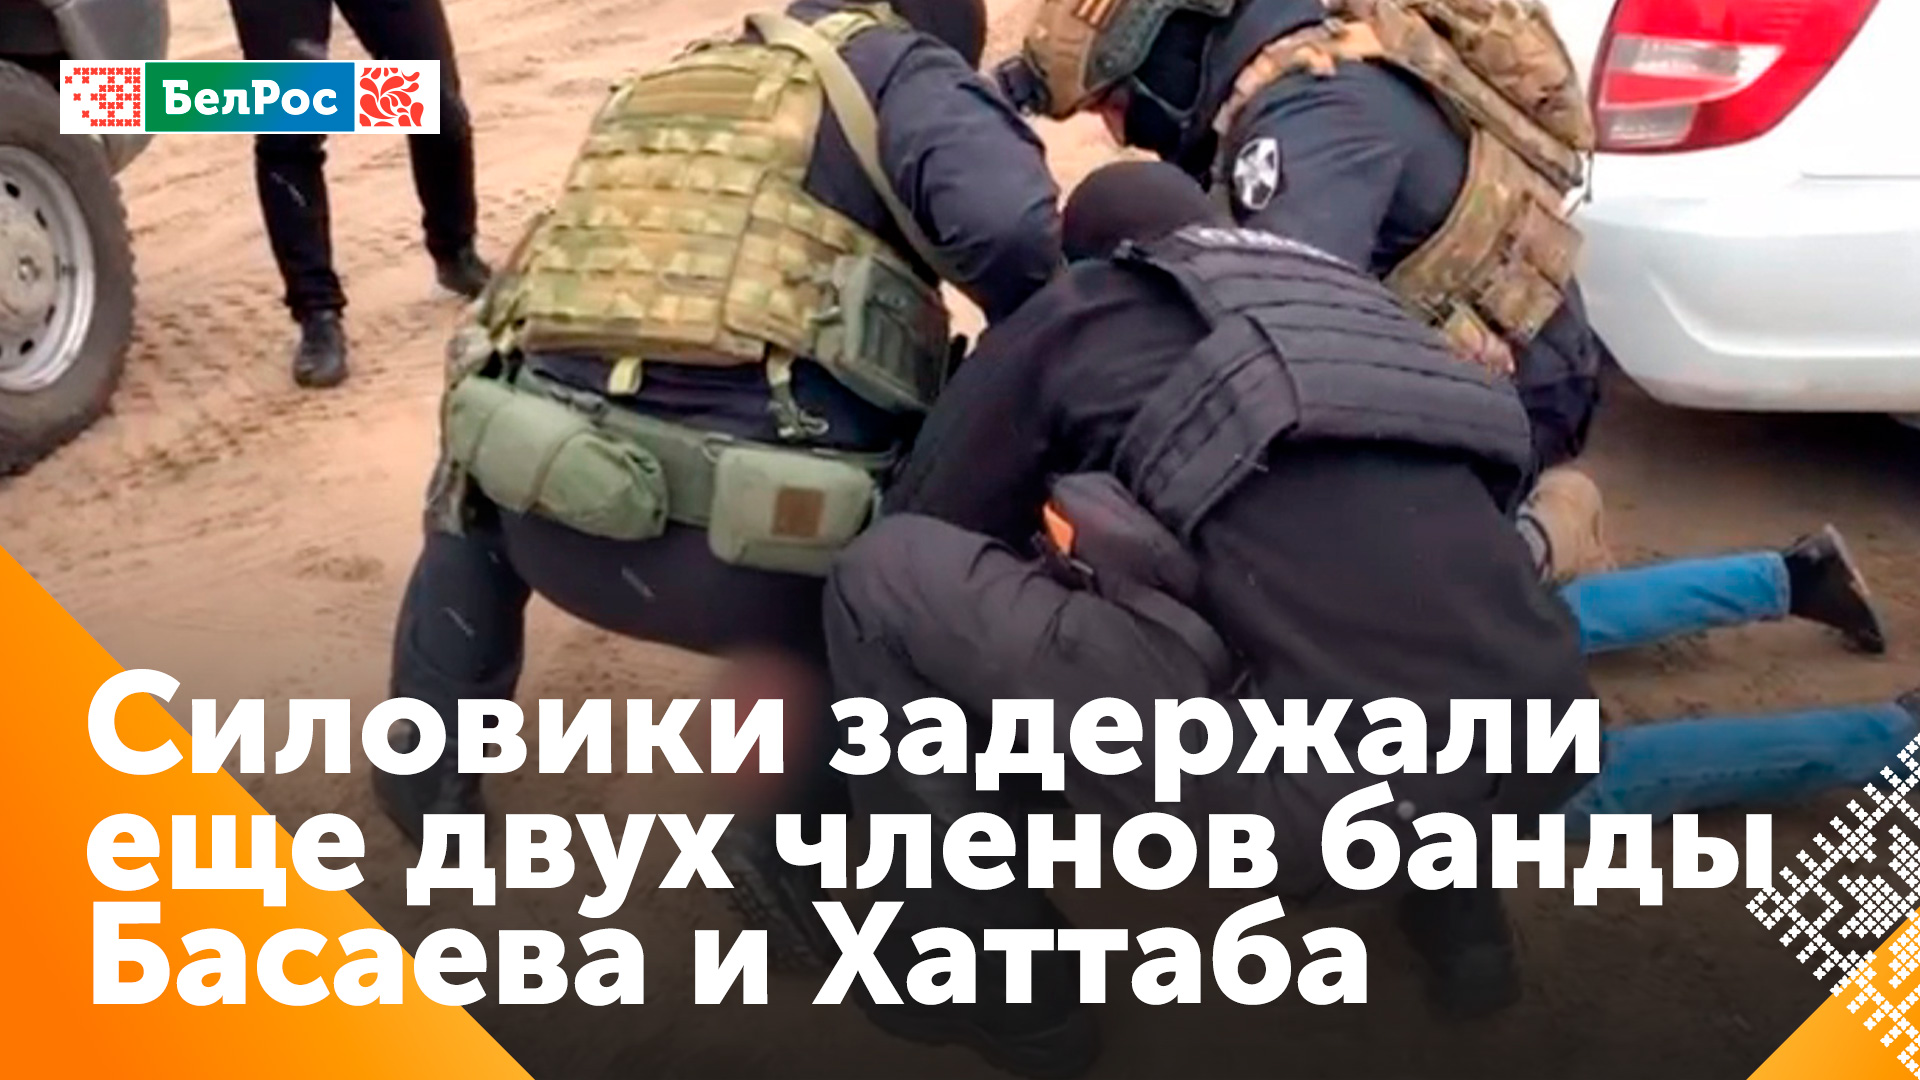 Задержаны ещё два участника банды Басаева и Хаттаба